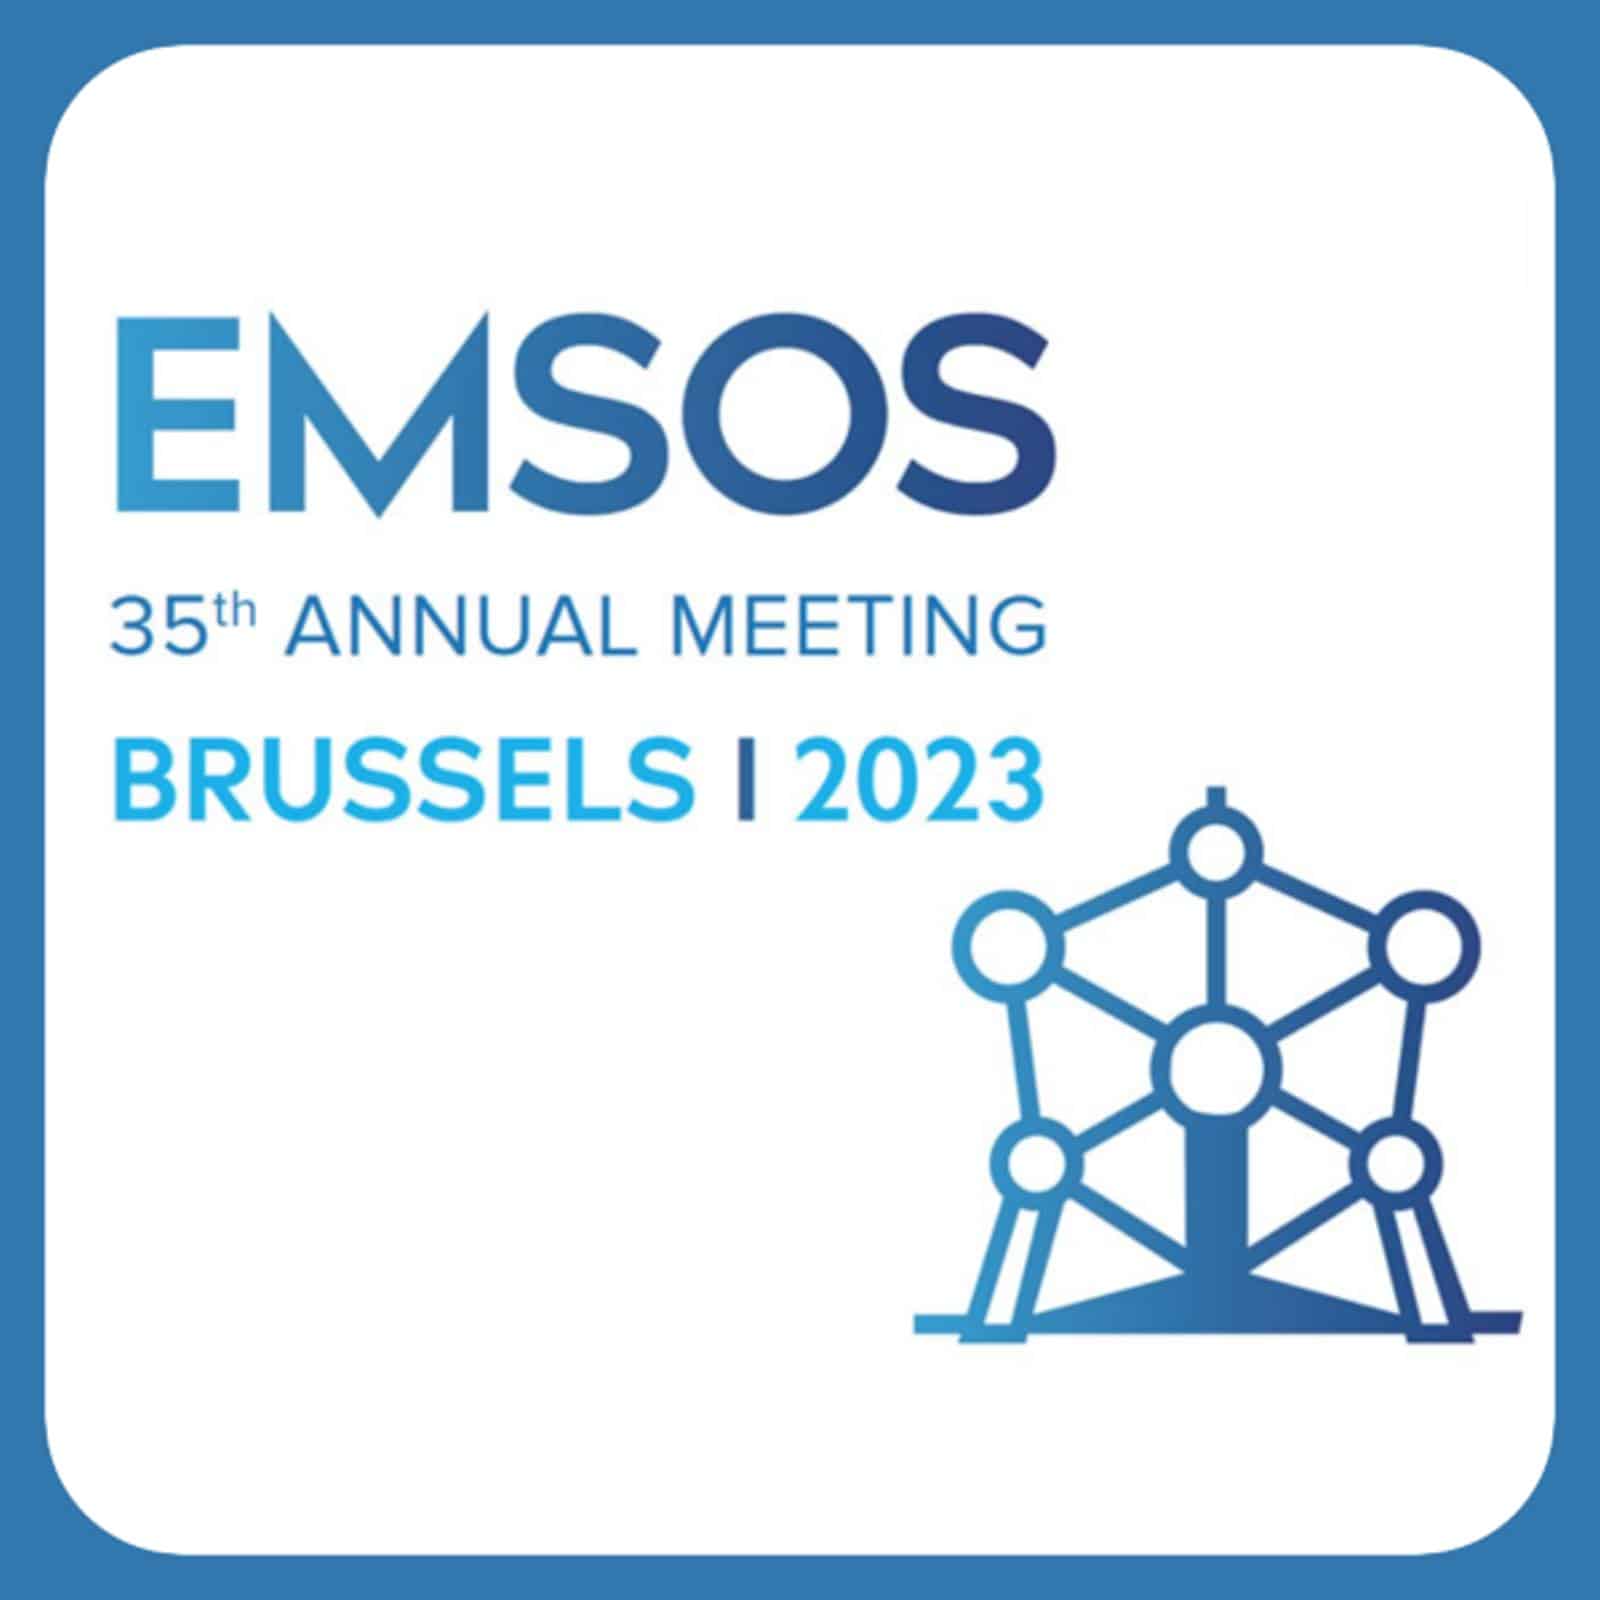 EMSOS 35th Annual Meeting Brussels 20223 001